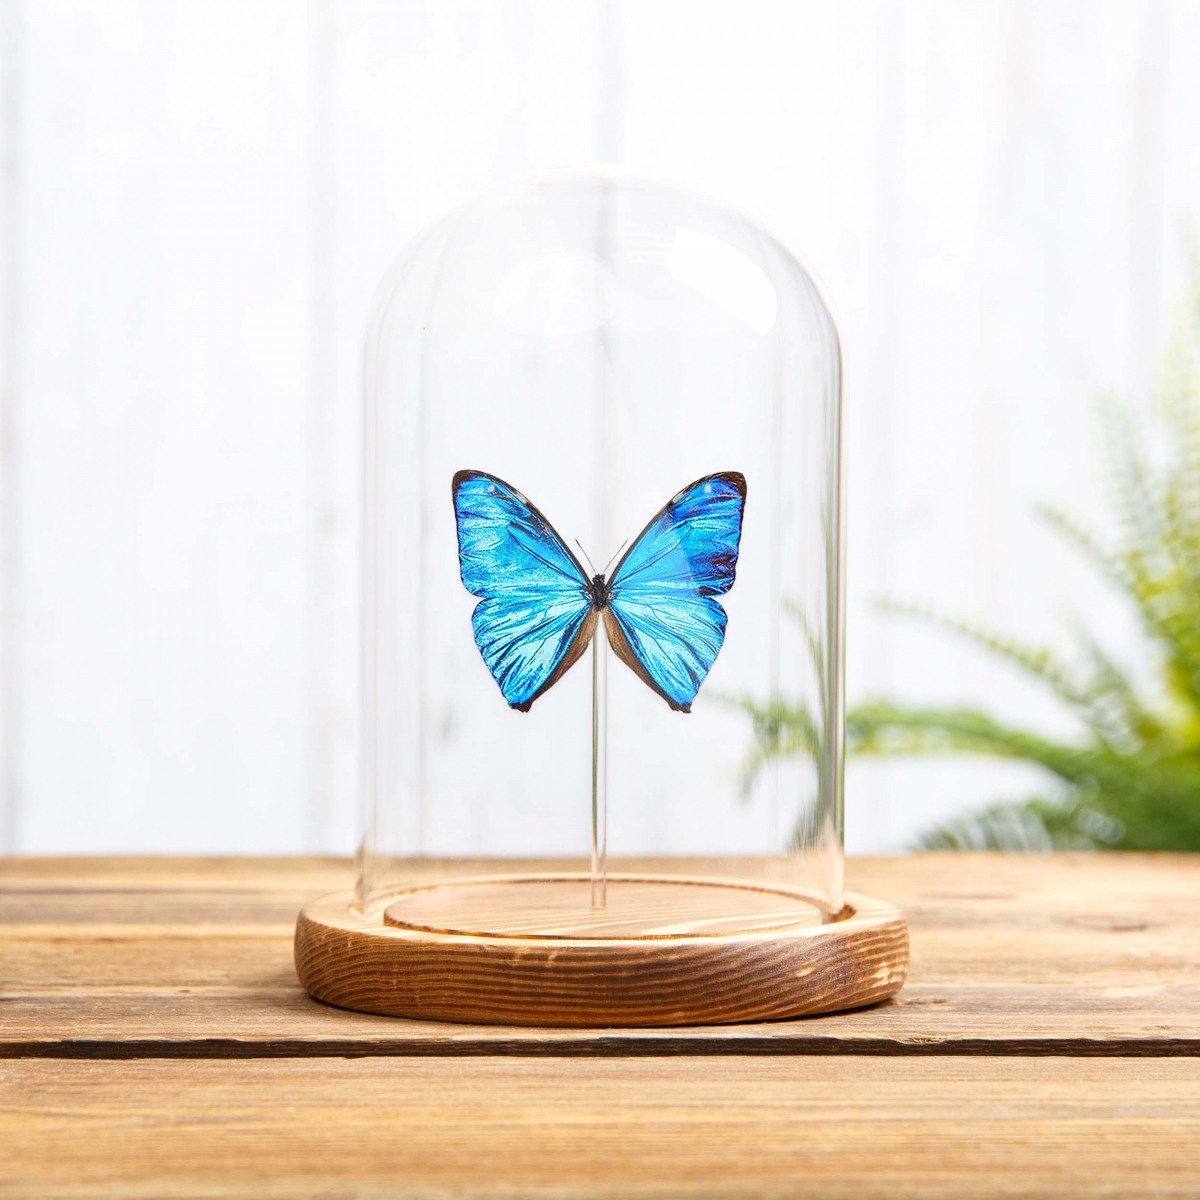 Aega Morpho Butterfly in Glass Dome with Wooden Base (Morpho aega)